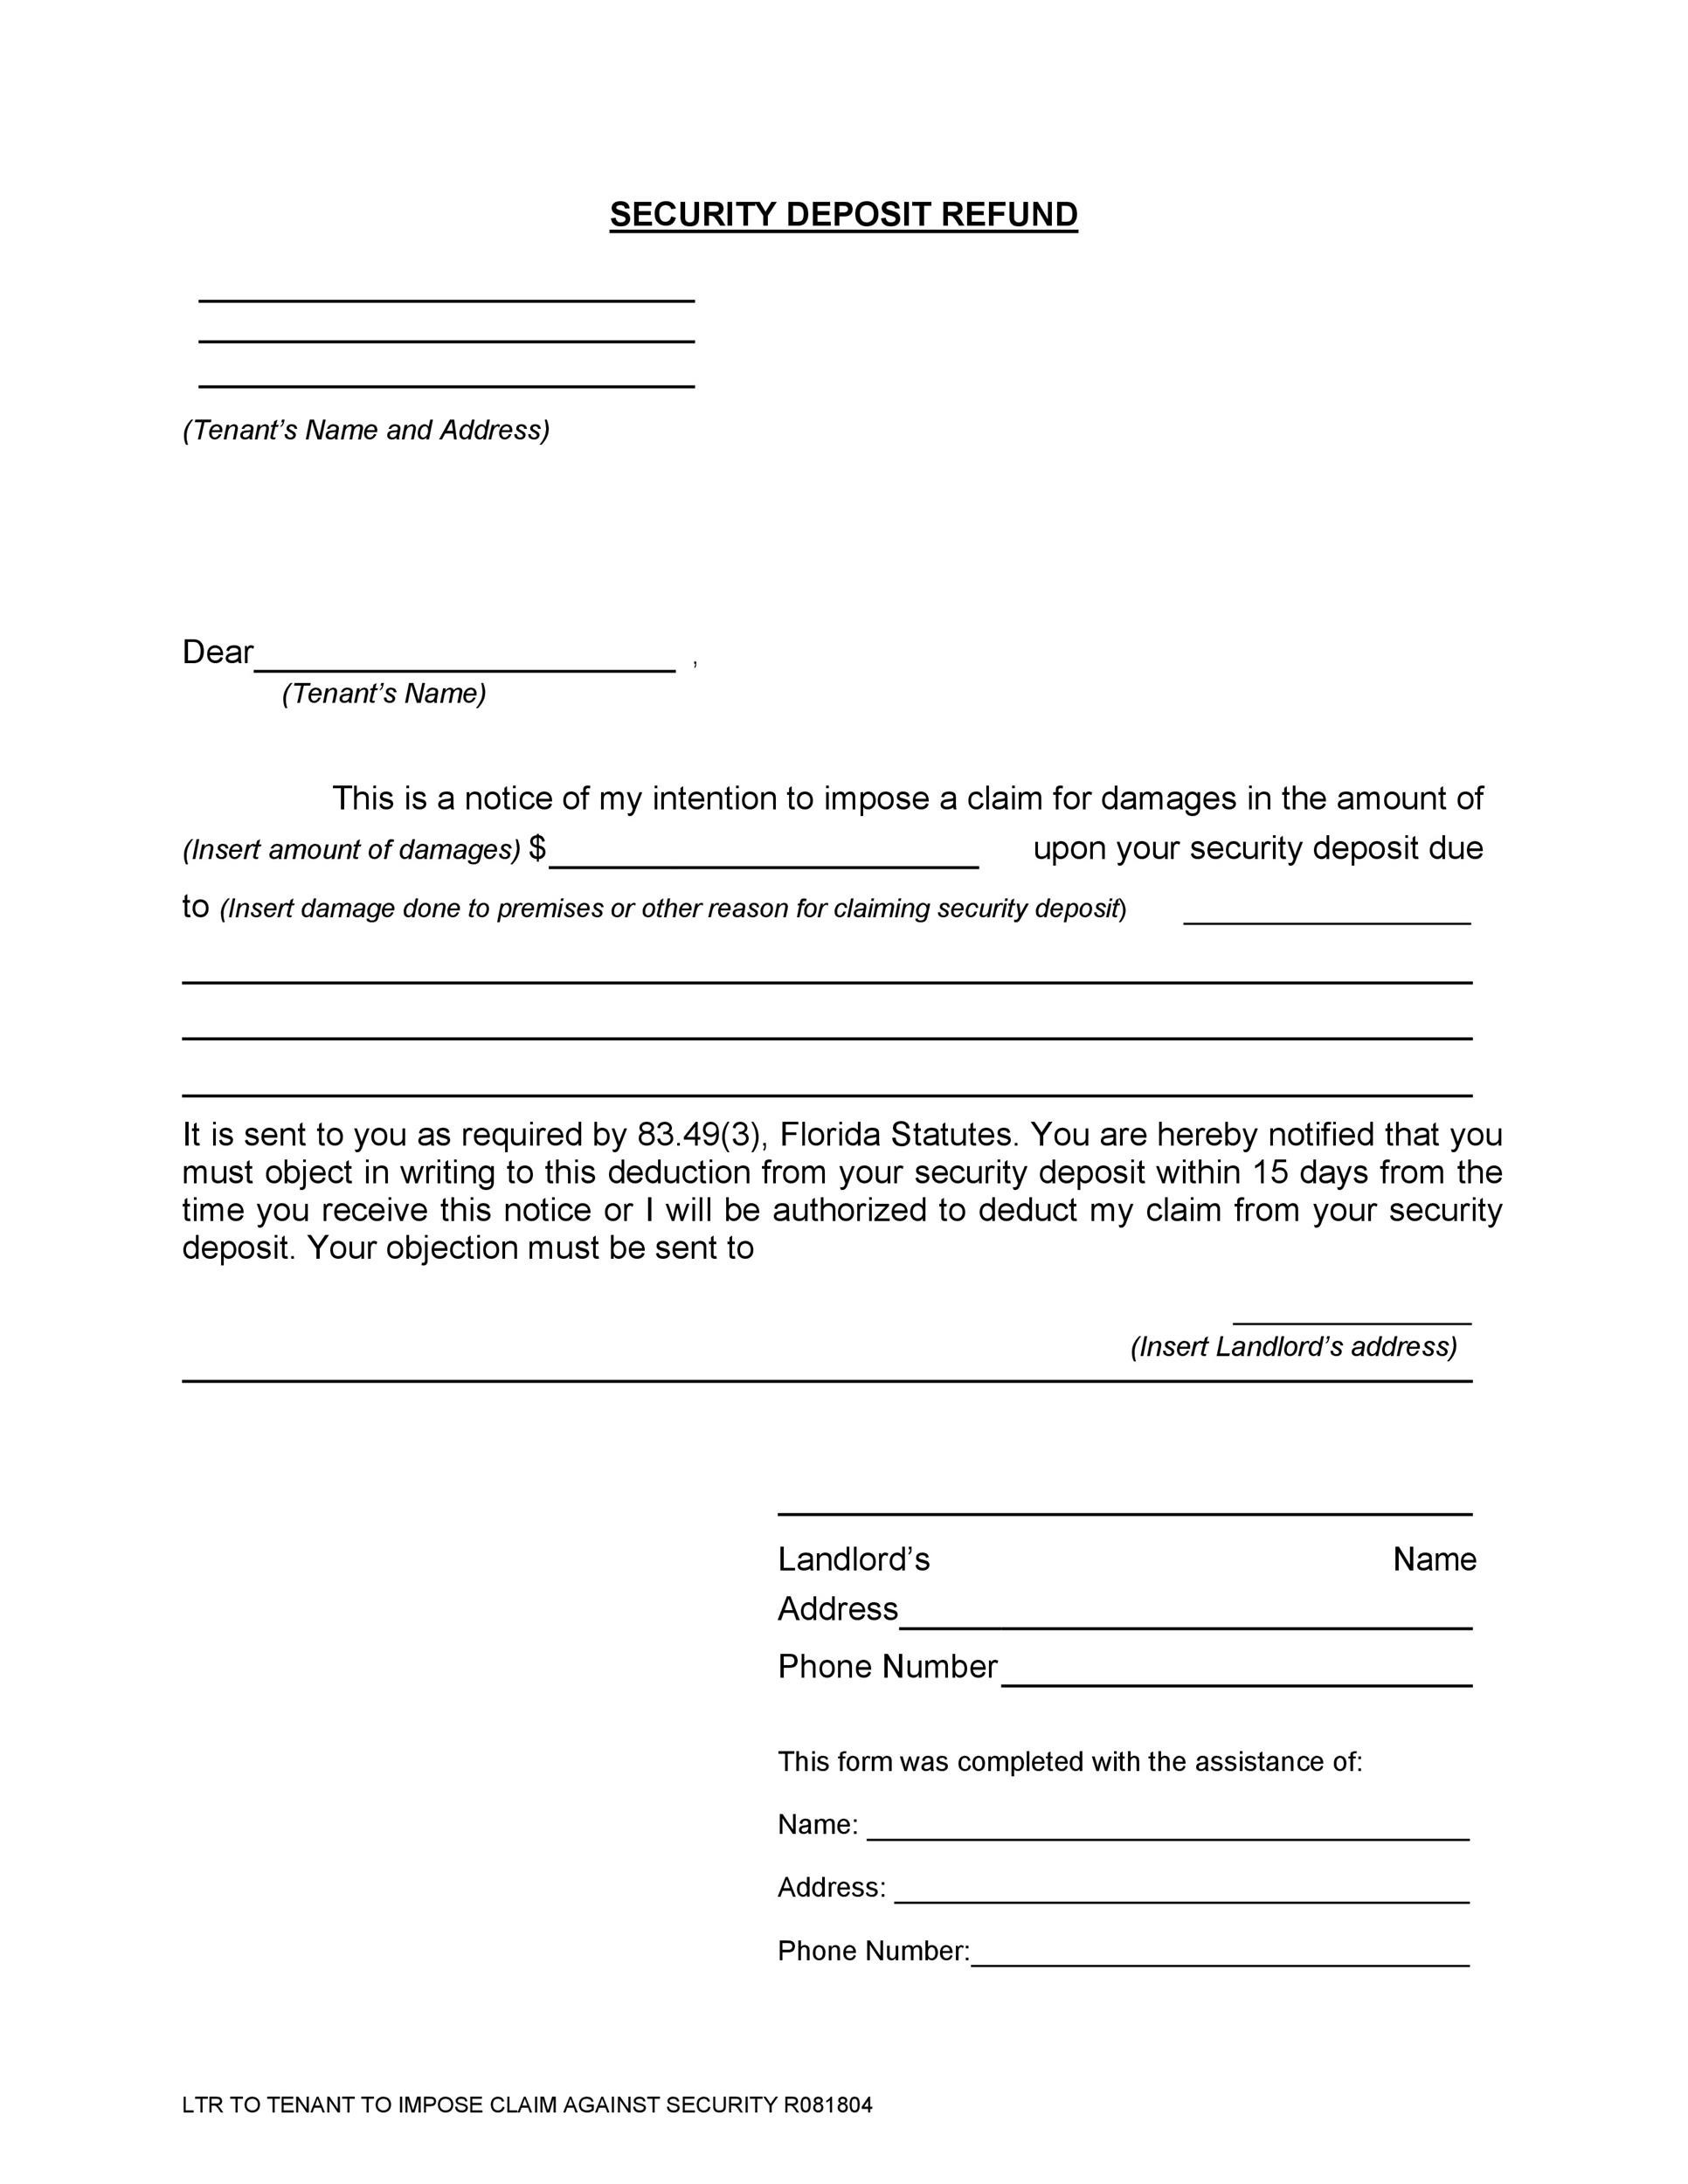 security deposit refund application letter